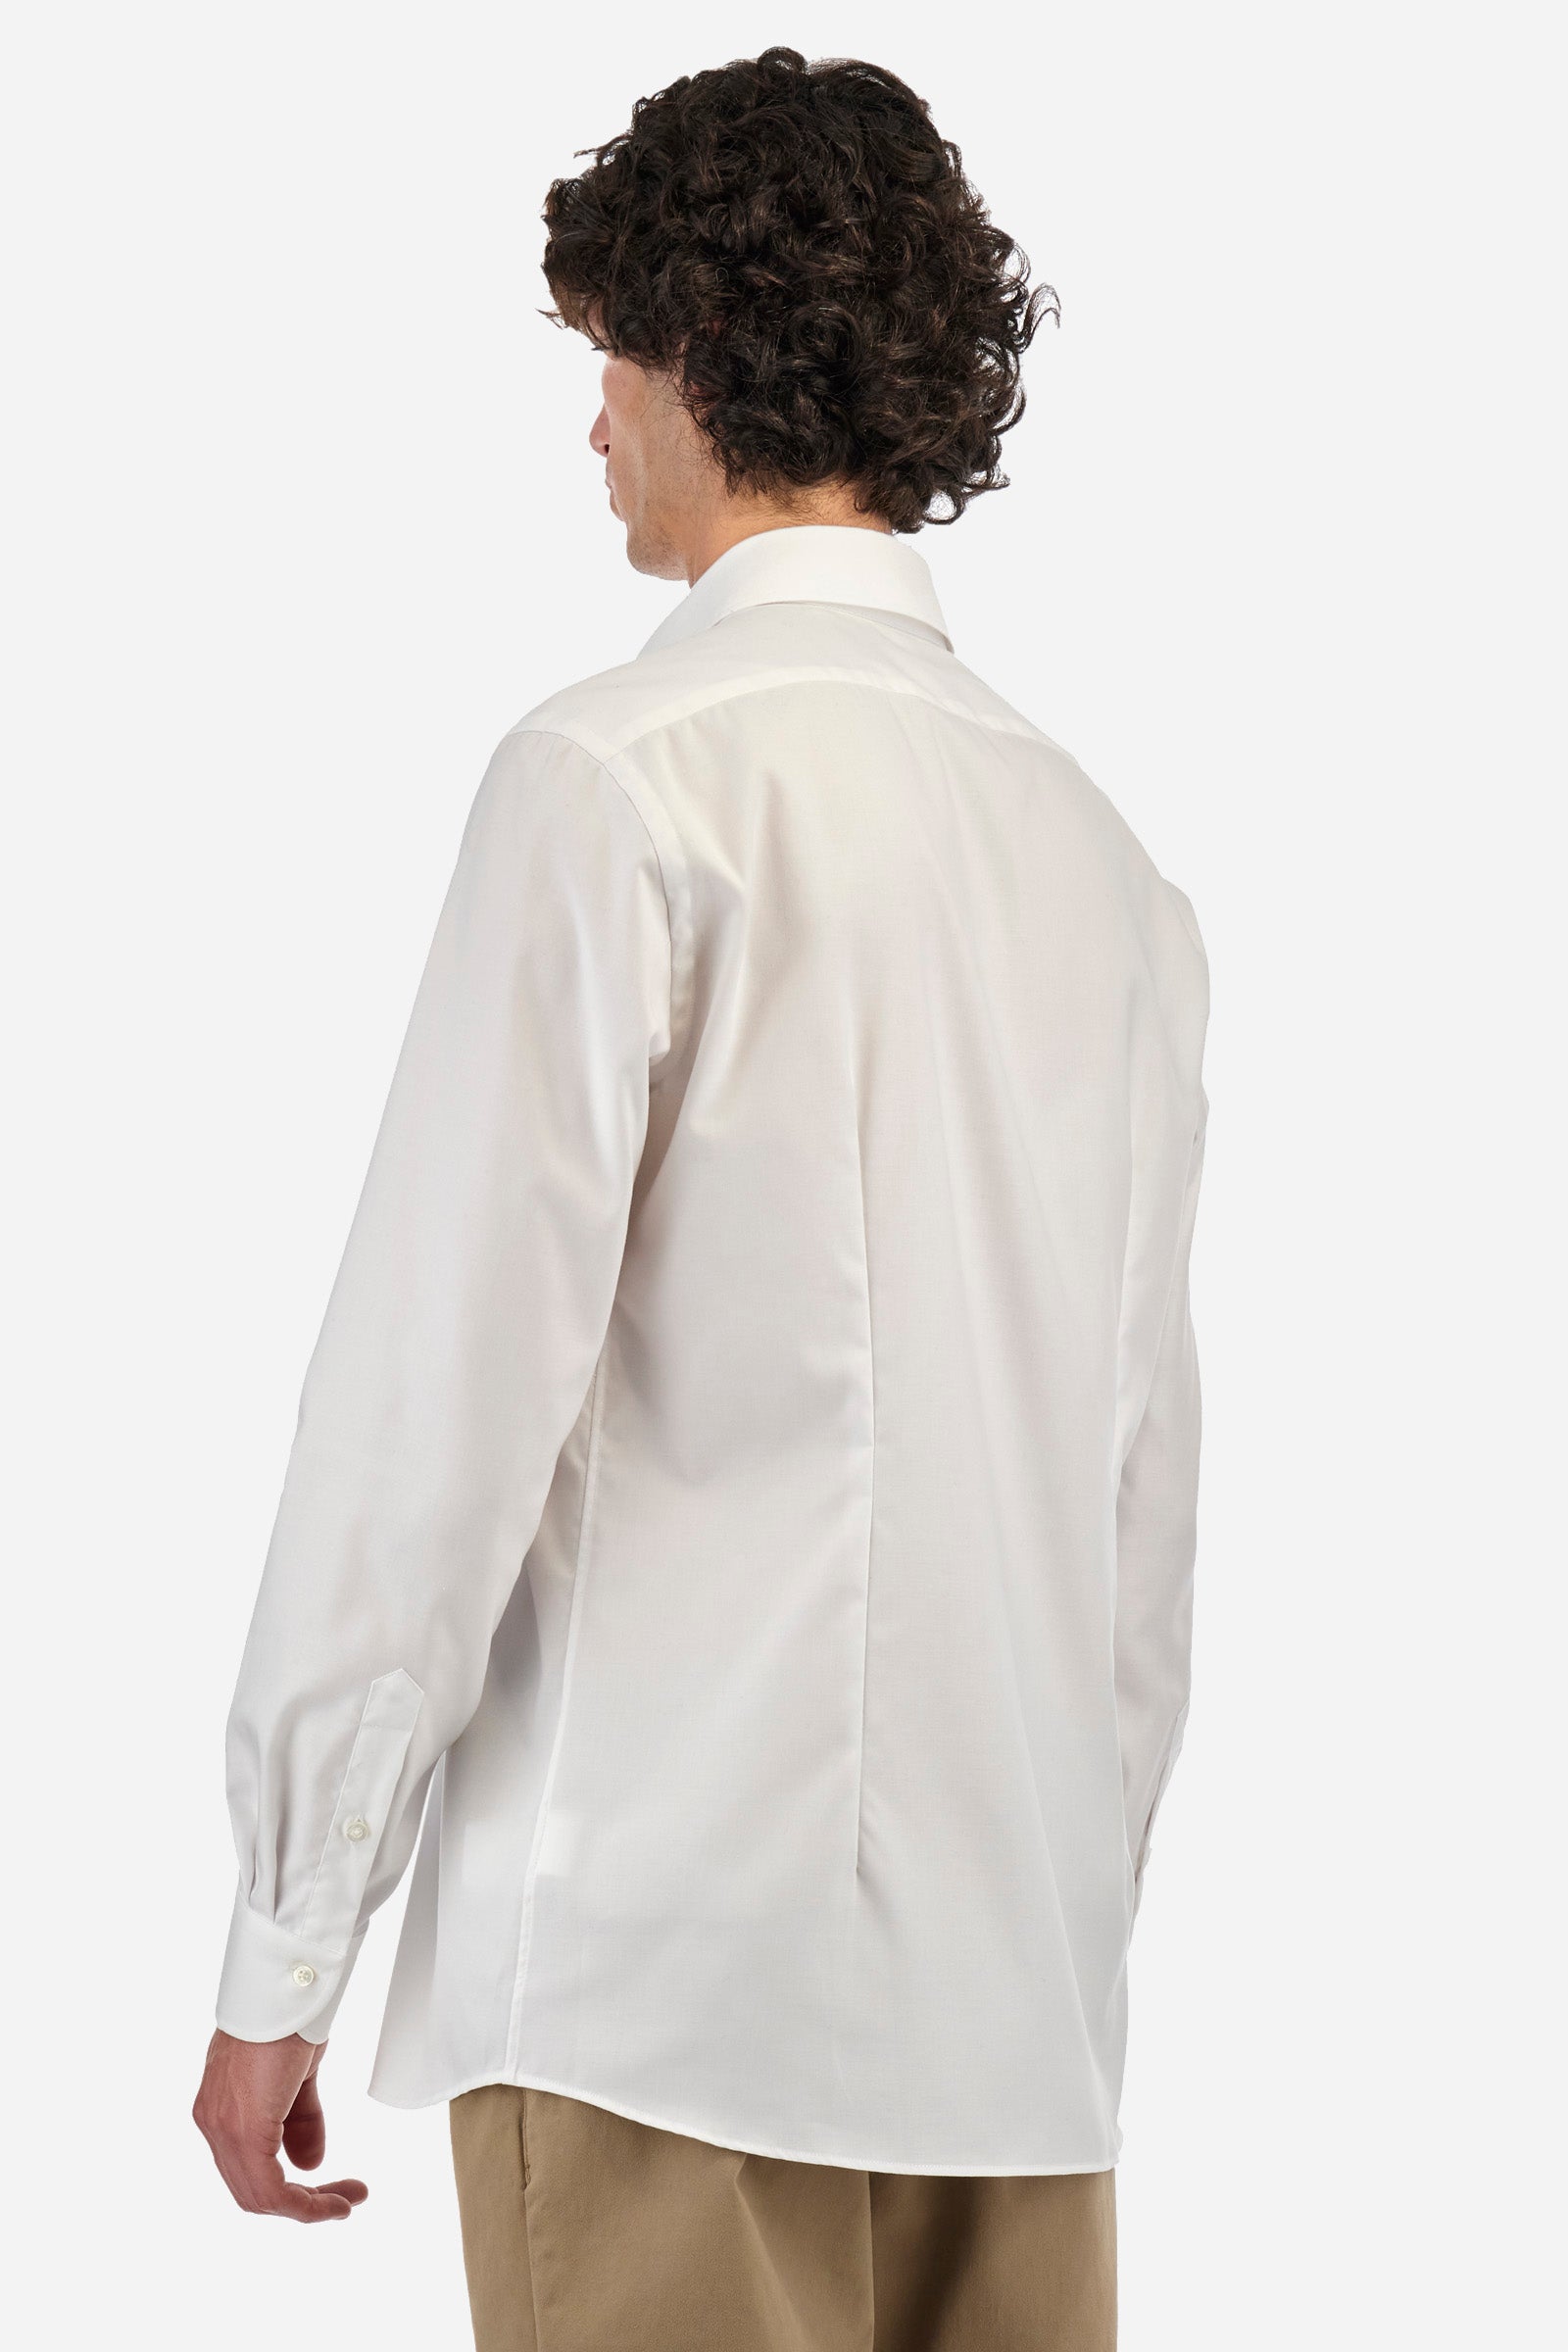 Men’s classic style long sleeve cotton shirt - Passion